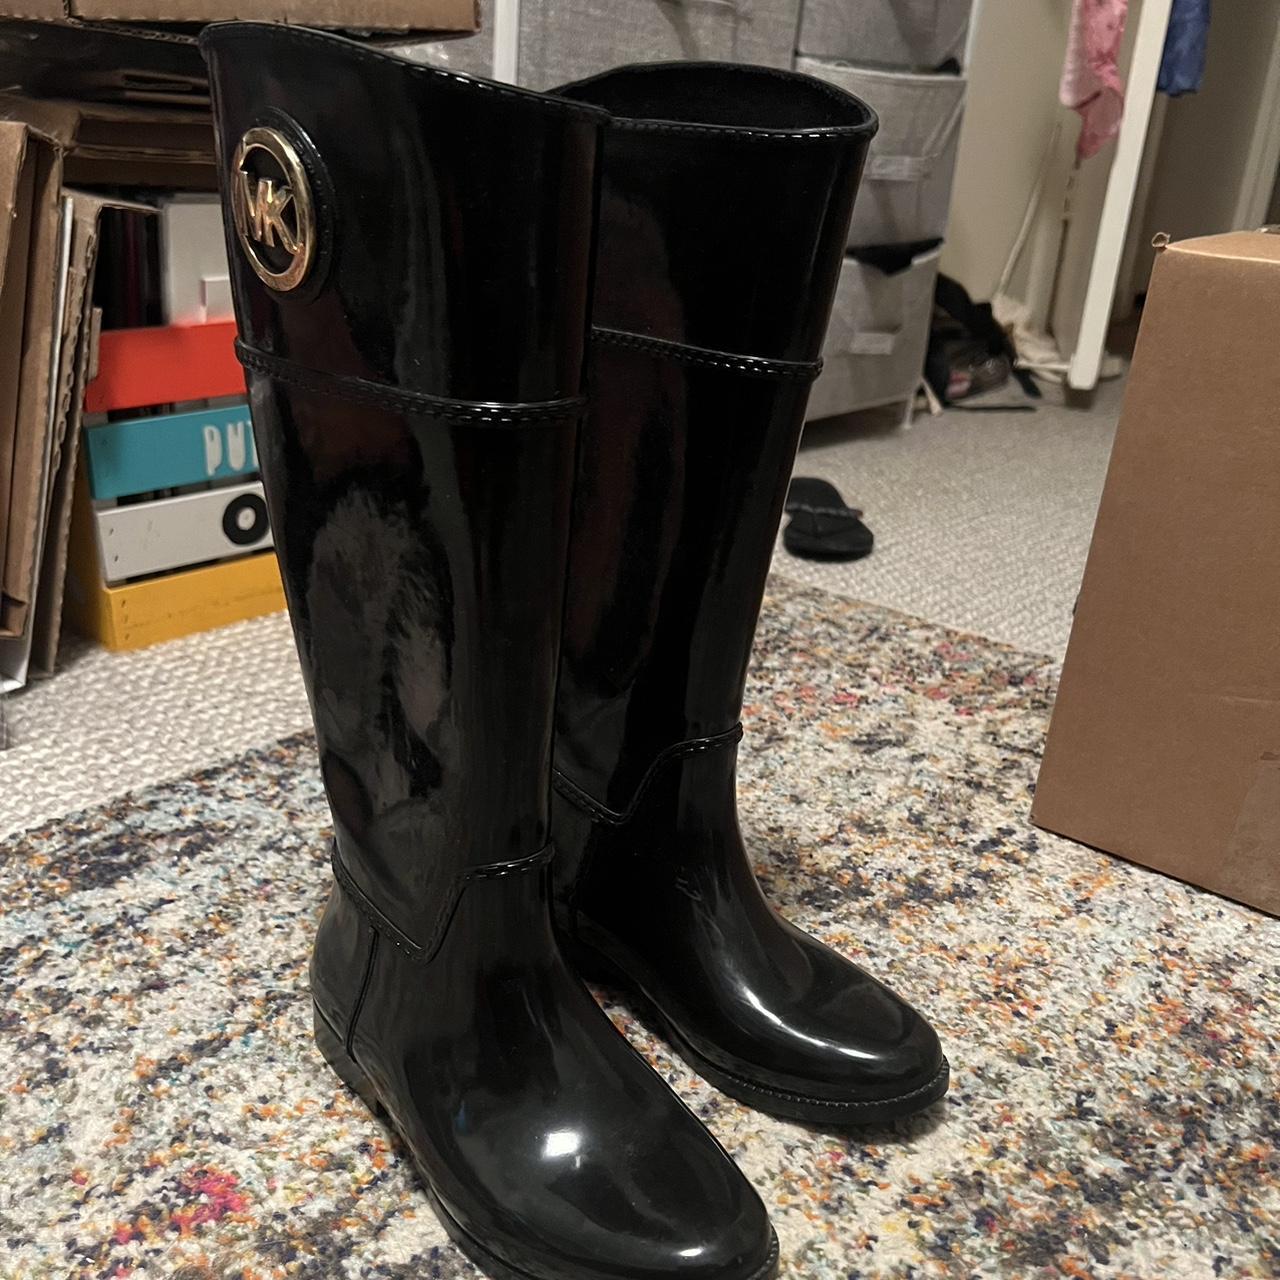 Michael Kors rain boots. Barely worn - no need for